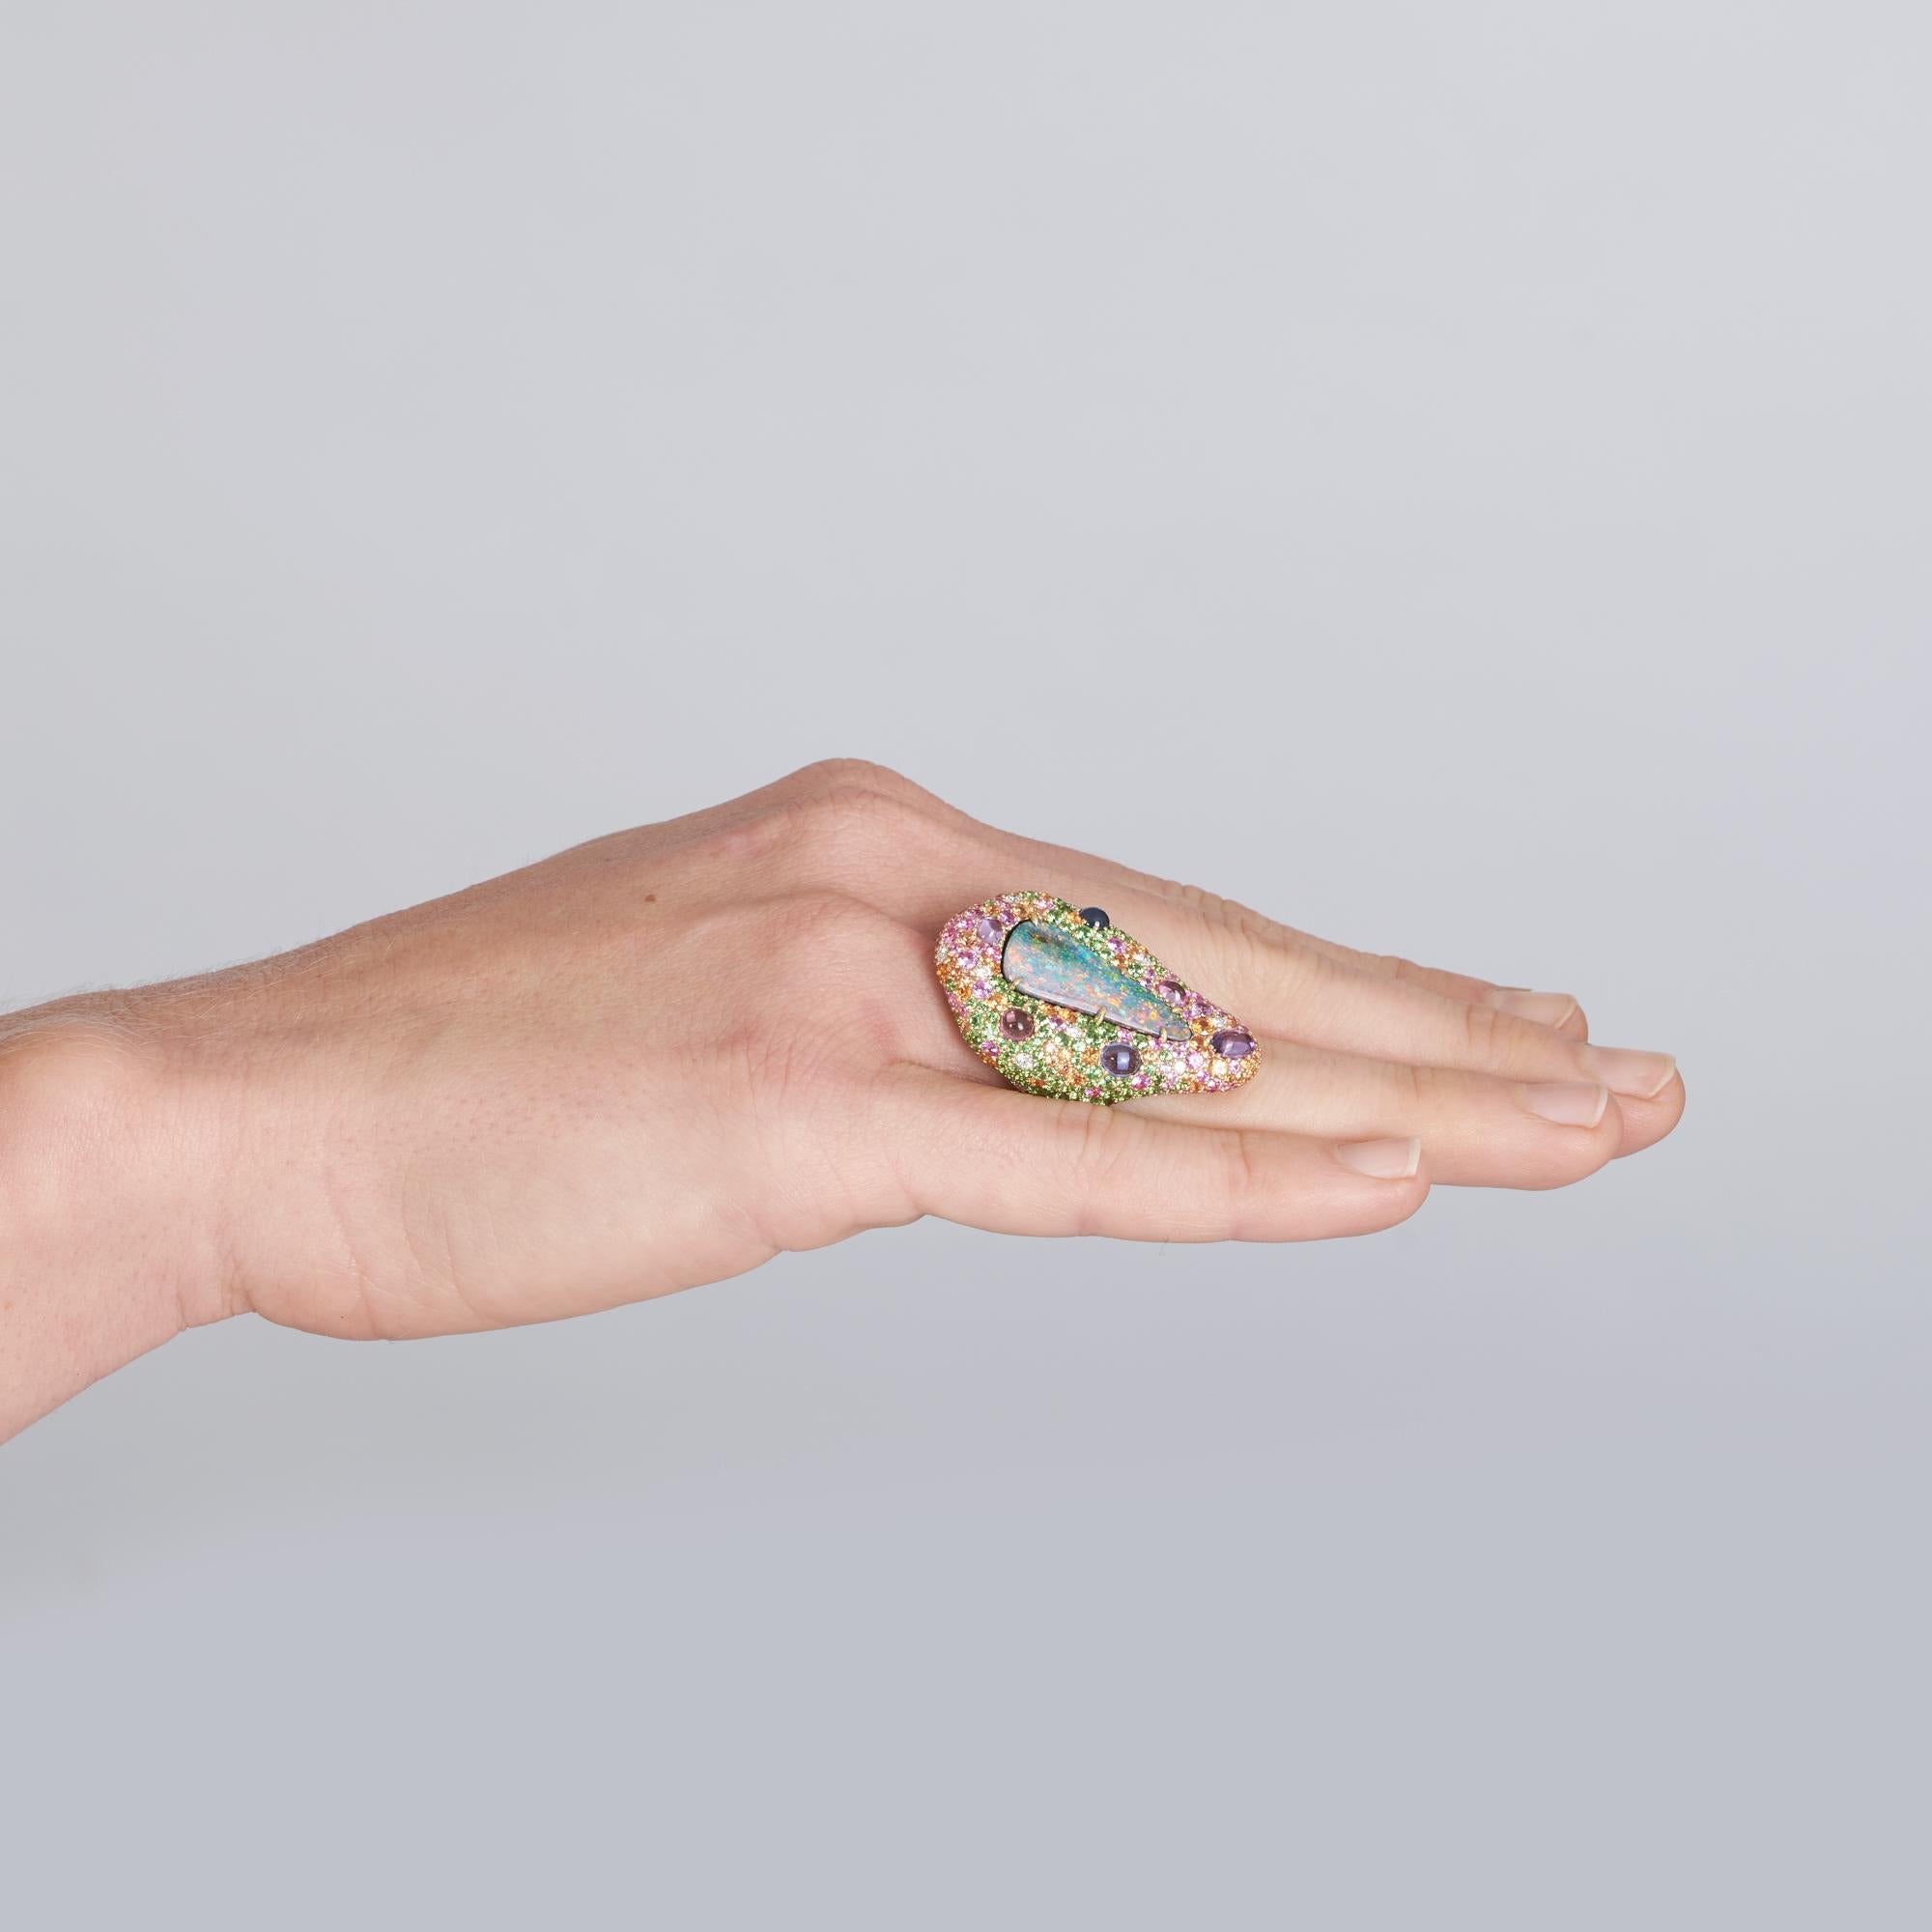 Margot McKinney 18 Karat Yellow Gold Ring with Opal, Tsavorite and Pink Sapphire 2